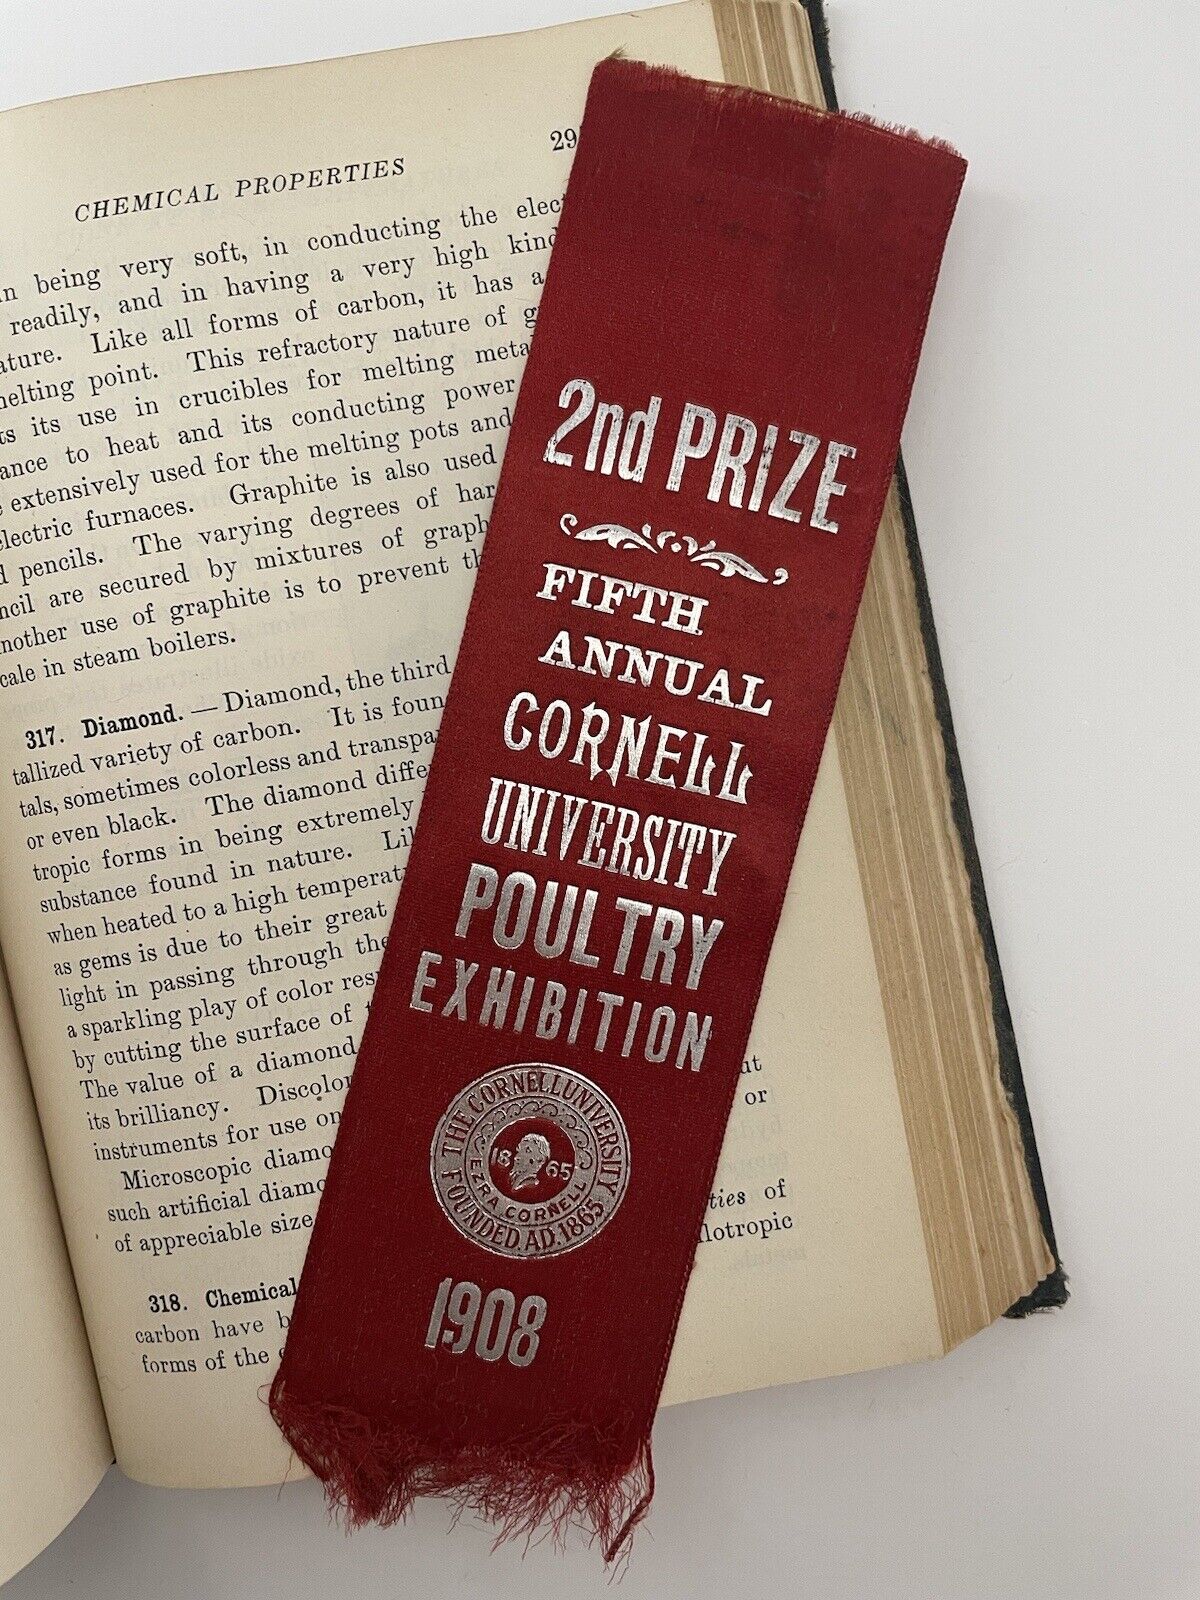 1908 Antique Historical Ephemera Ribbon Cornell University Poultry 2nd Prize